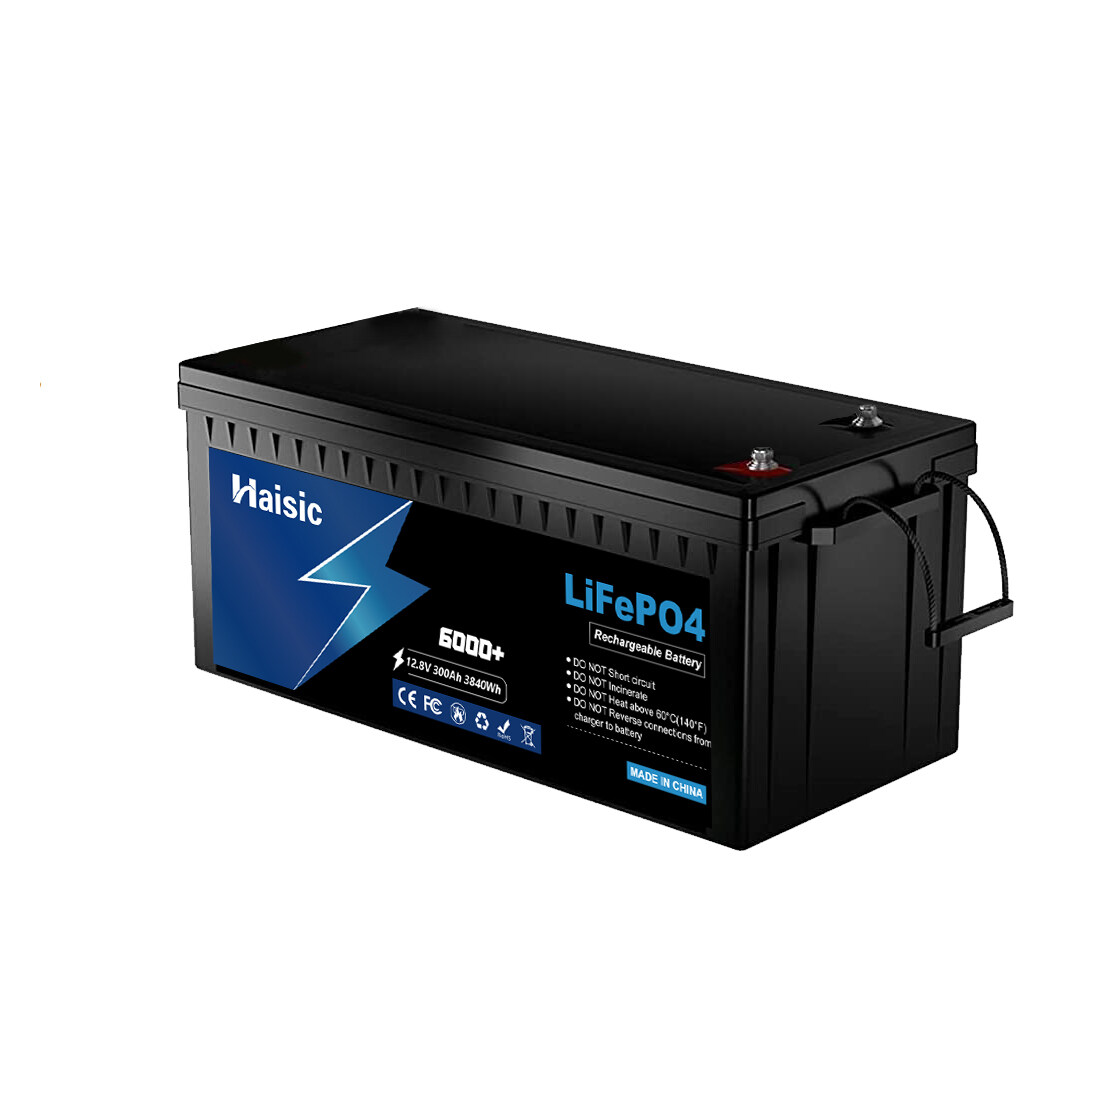 12.8V 3840Wh lithium LifePO4 battery pack